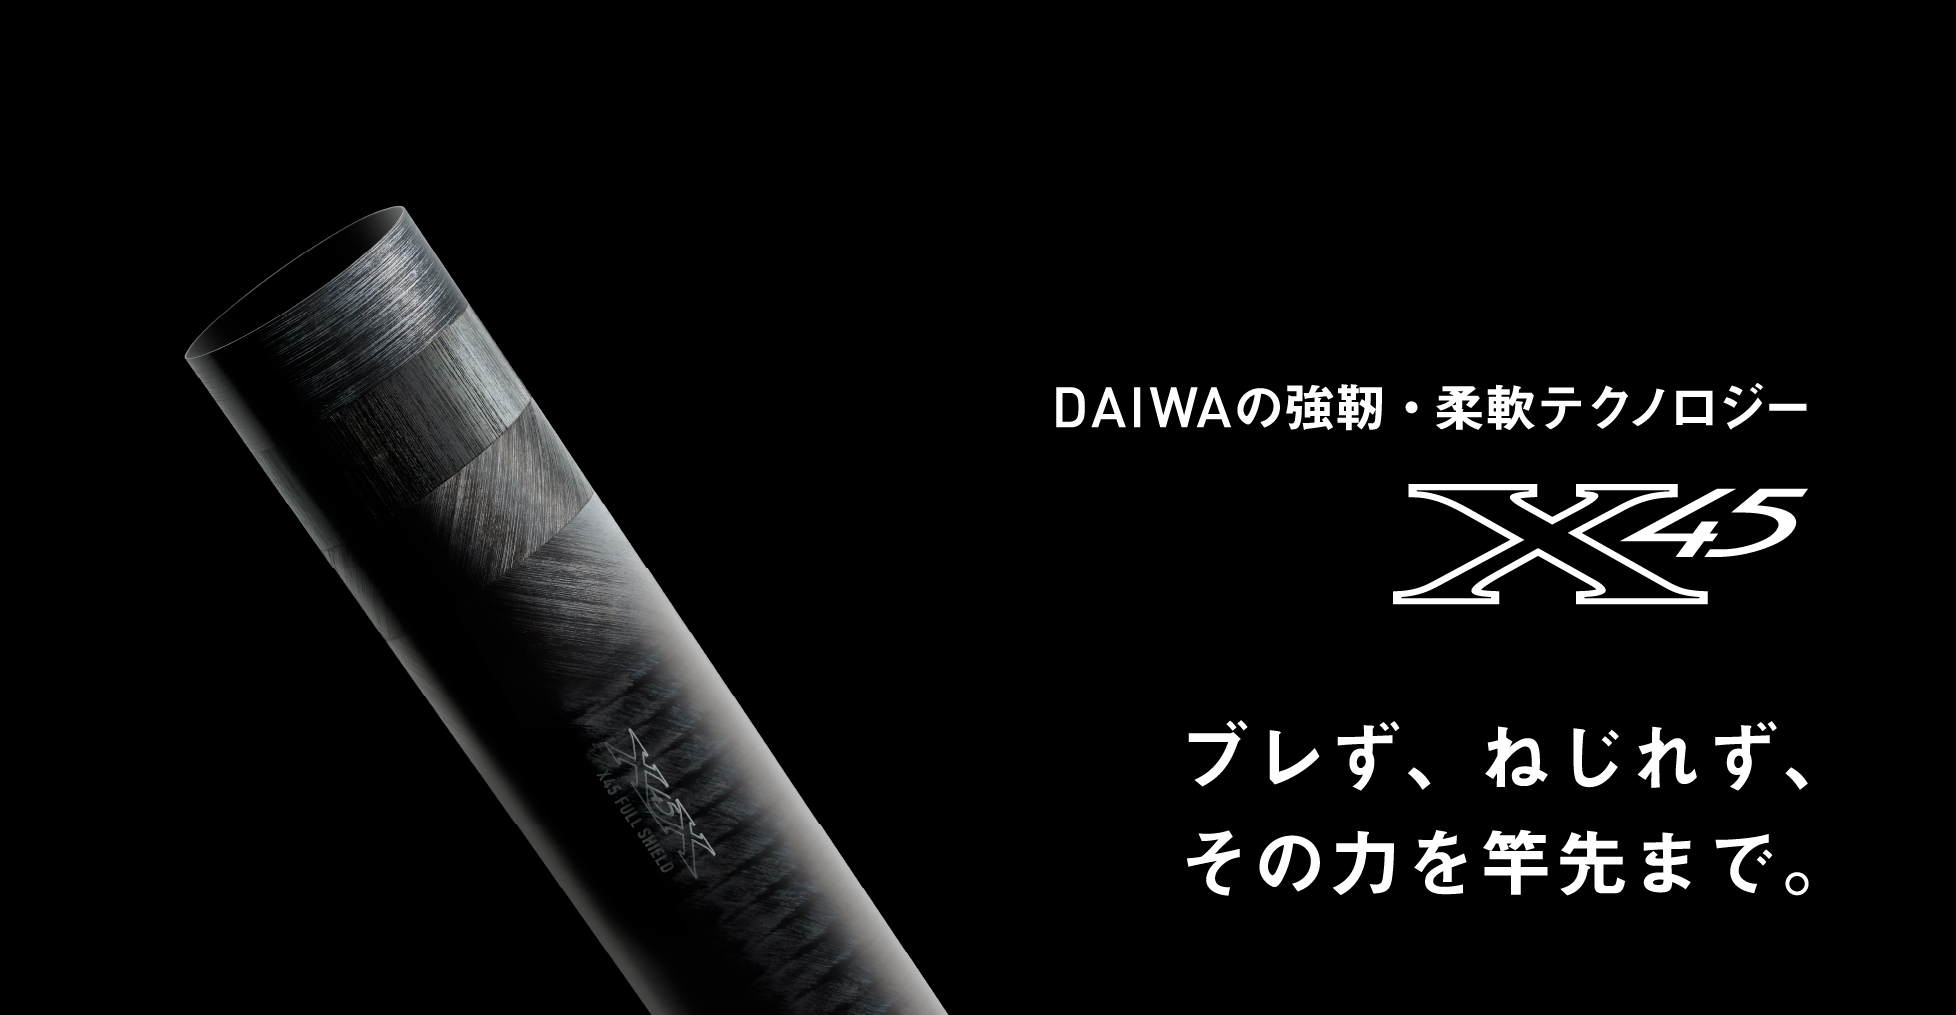 DAIWAの強靭・柔軟テクノロジー X45 / X45 フルシールド ブレず、ねじれず、その力を竿先まで。